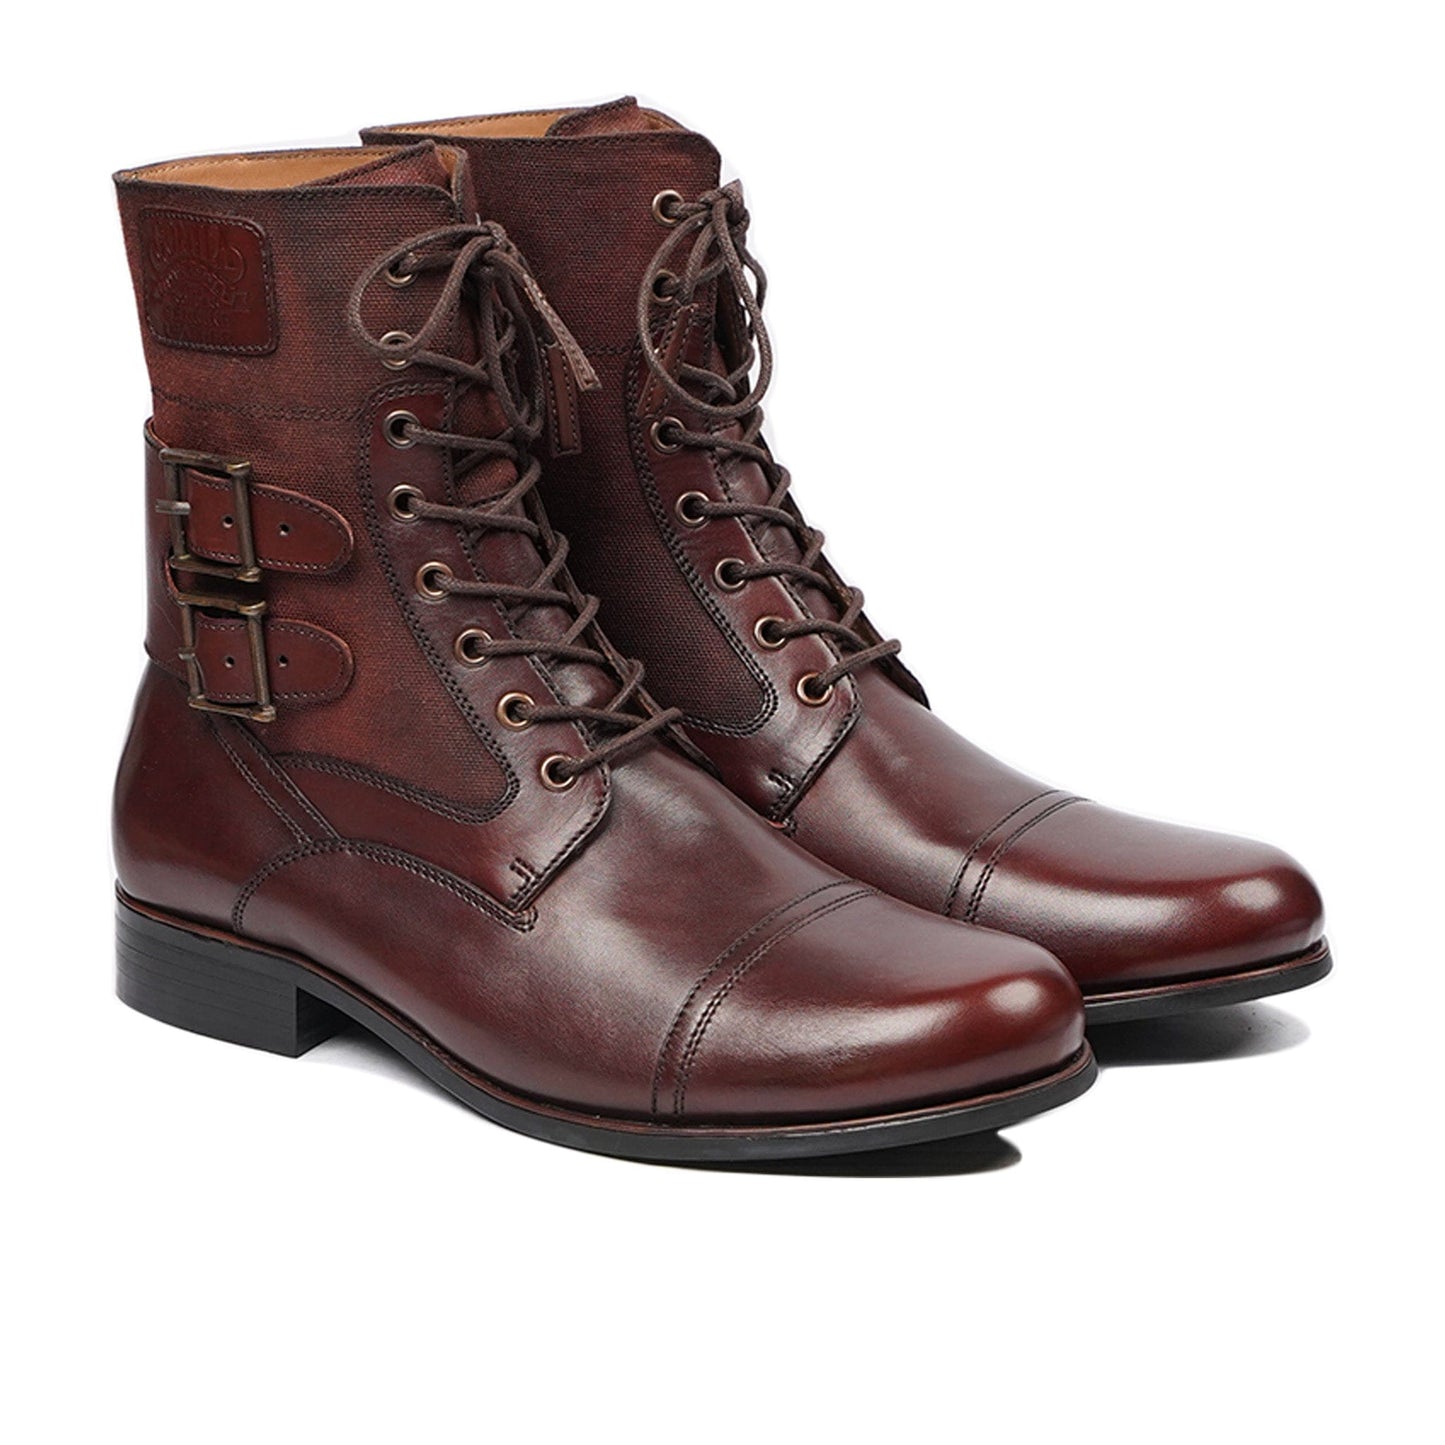 Men's Boots | Biker, Smart, & Casual Boots For Men Leather Boots